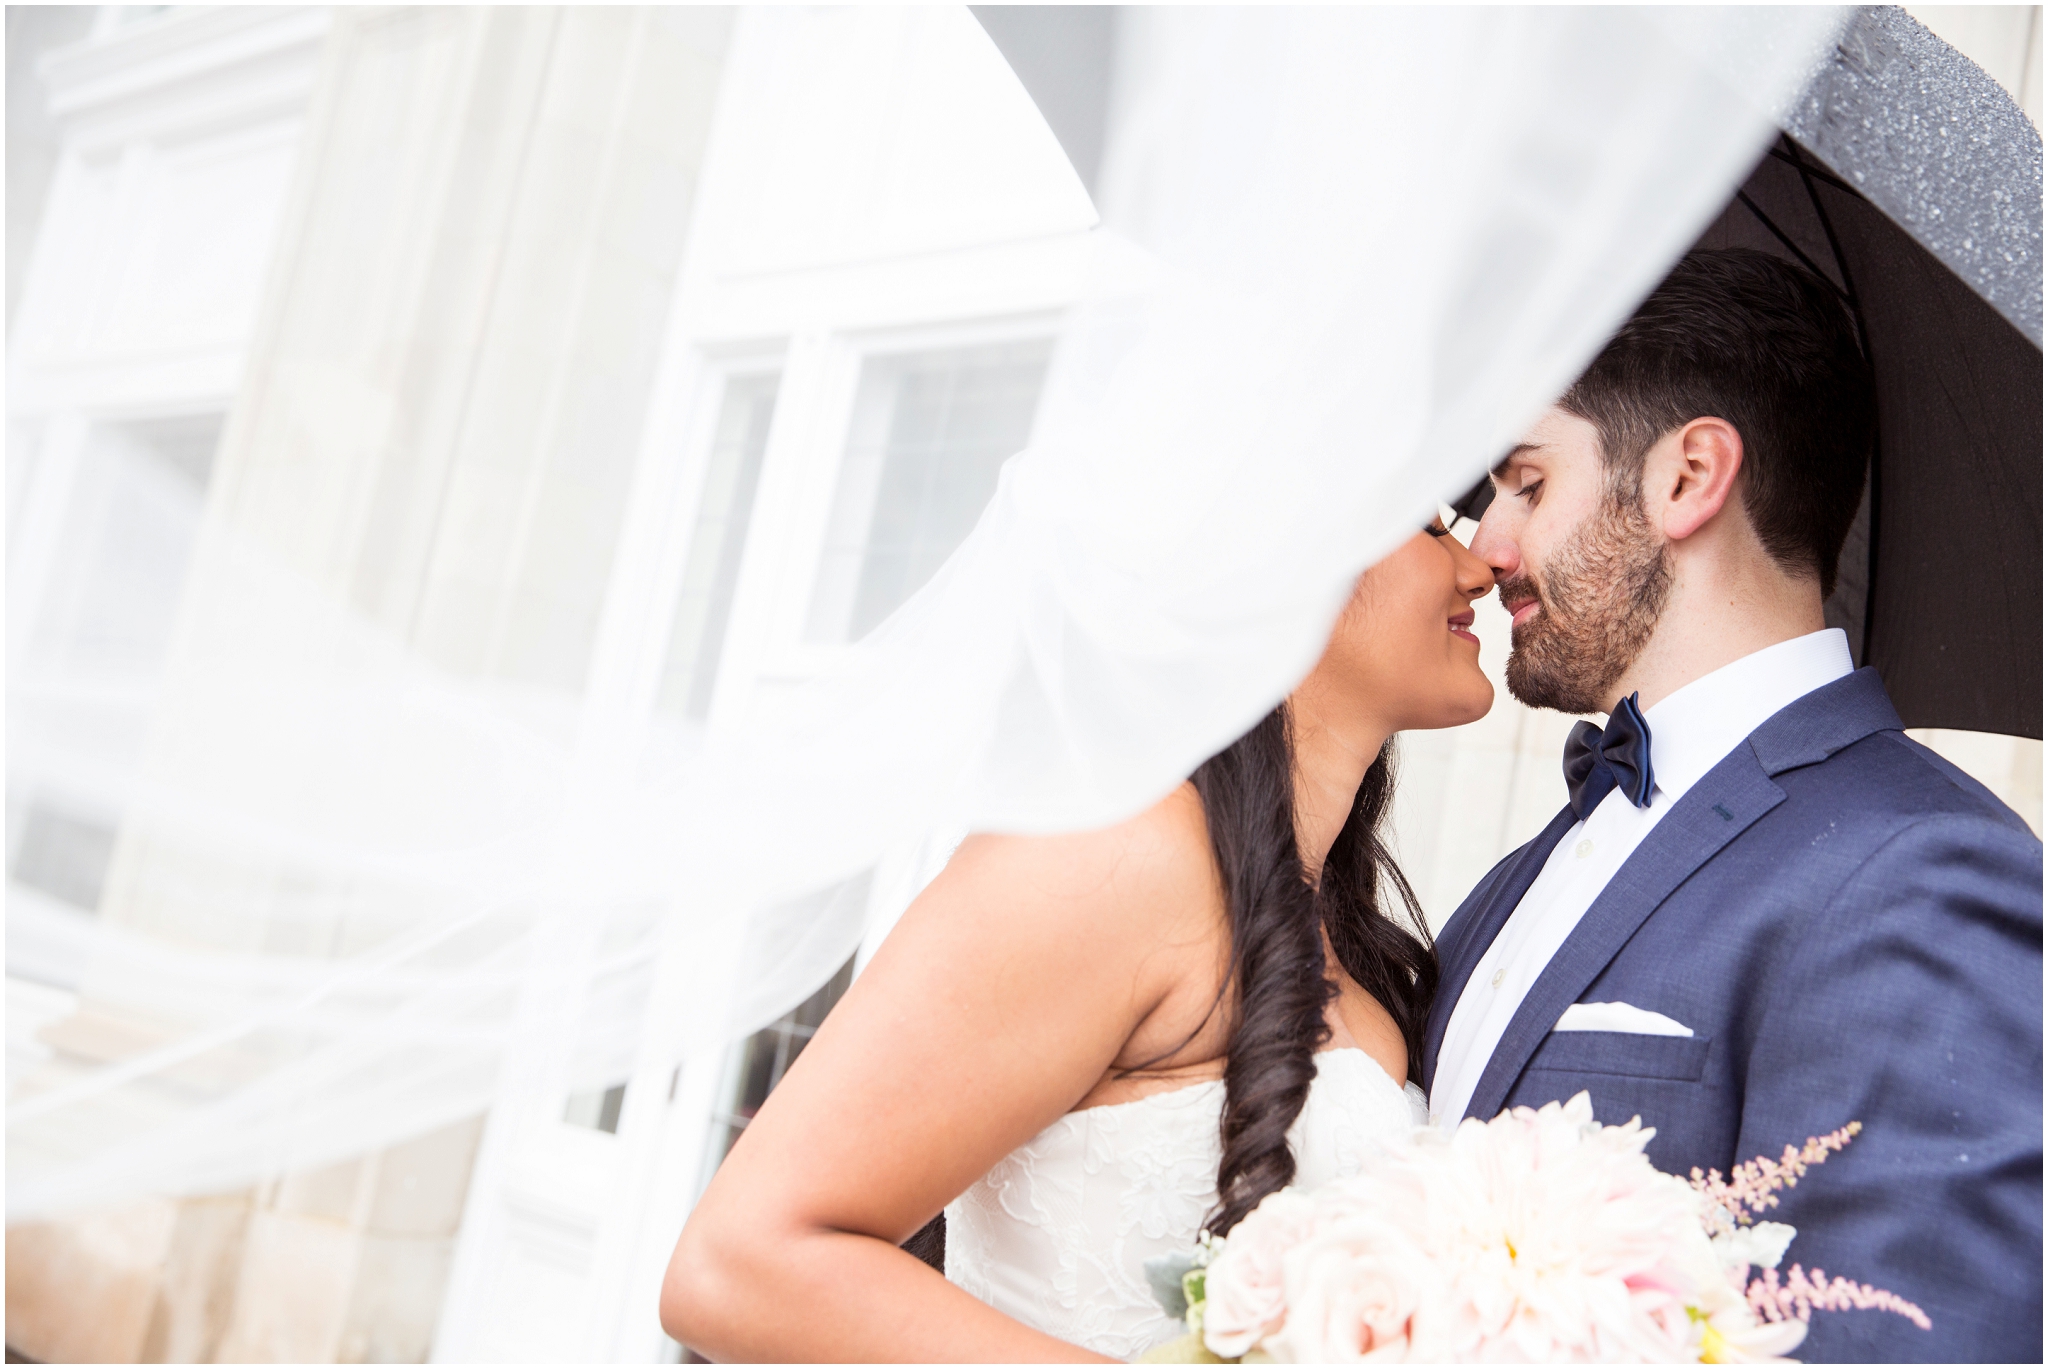 Hotel -Macdonald- Wedding- Photos-Umbrellas and veils